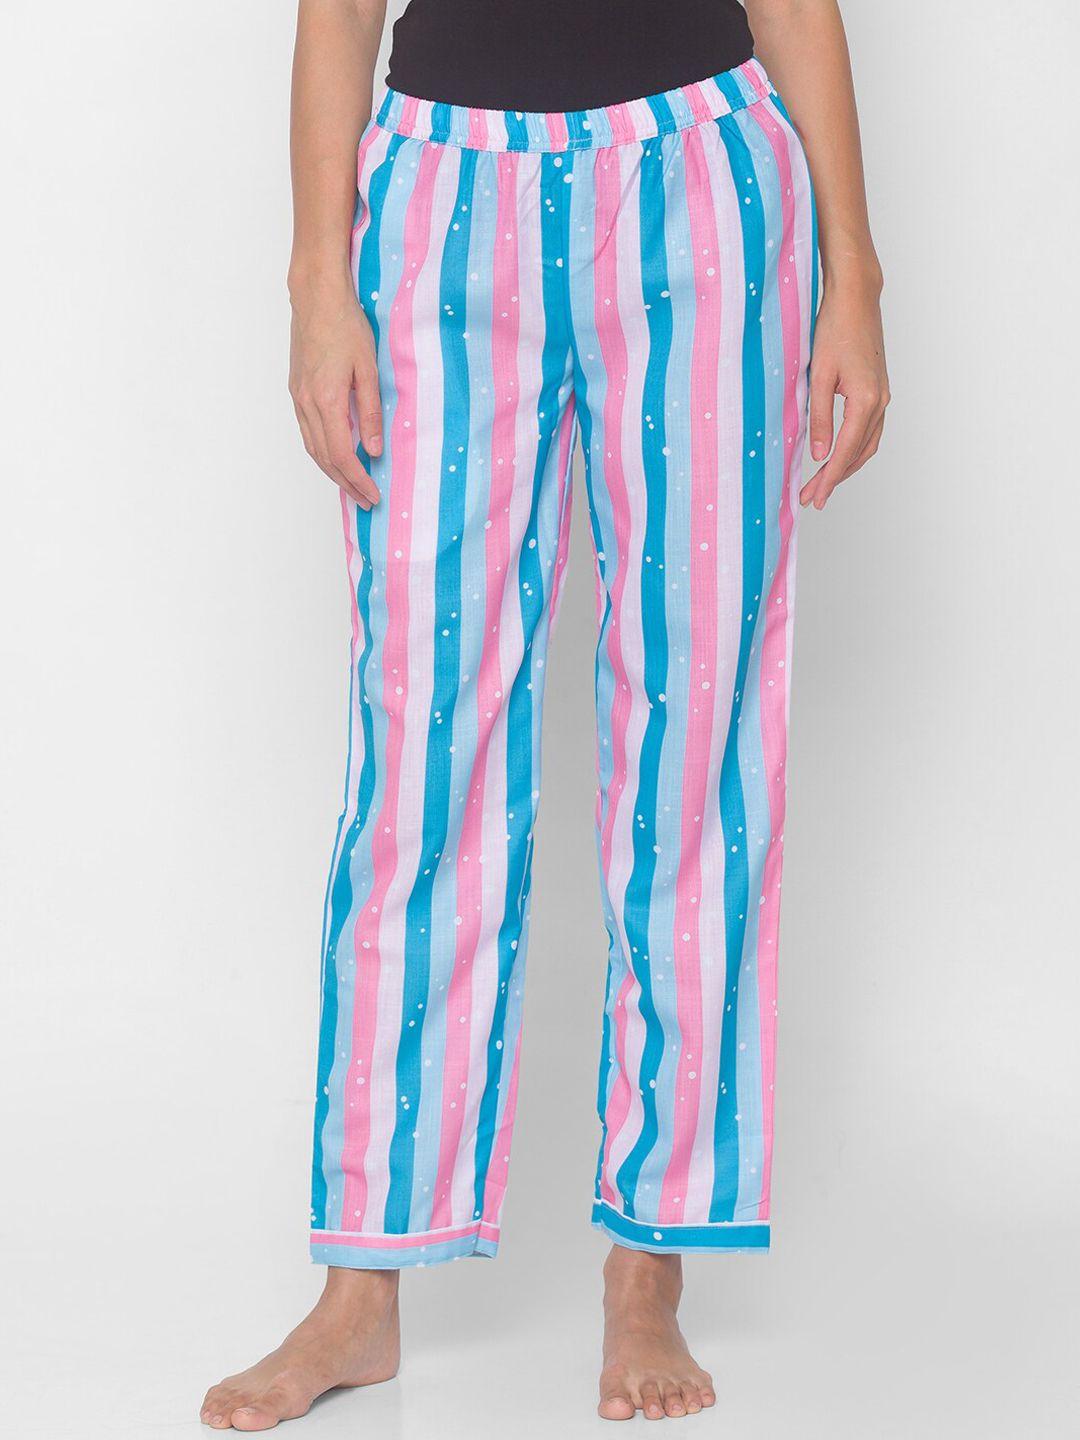 fashionrack women multicoloured striped lounge pants